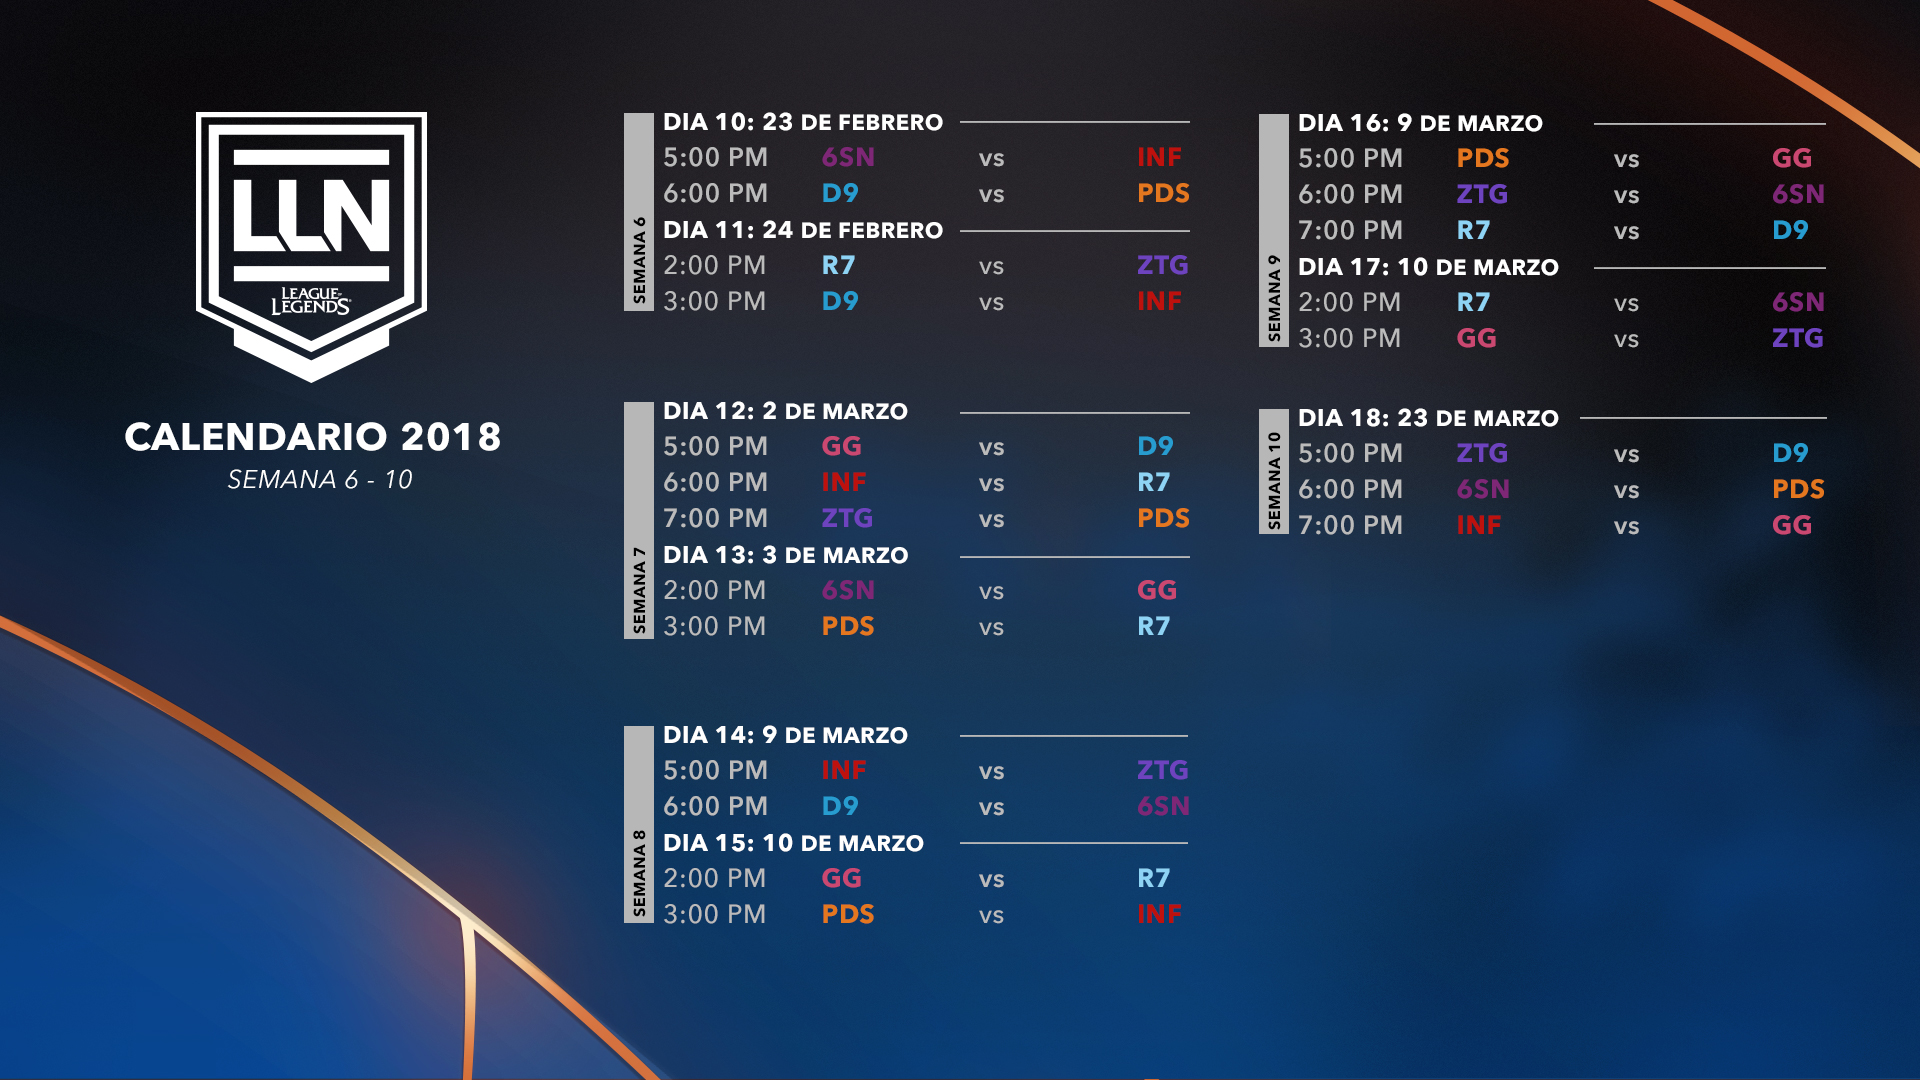 Calendario LLN 2018: echa un vistazo a los horarios de la fase de vuelta ― Codigo Esports